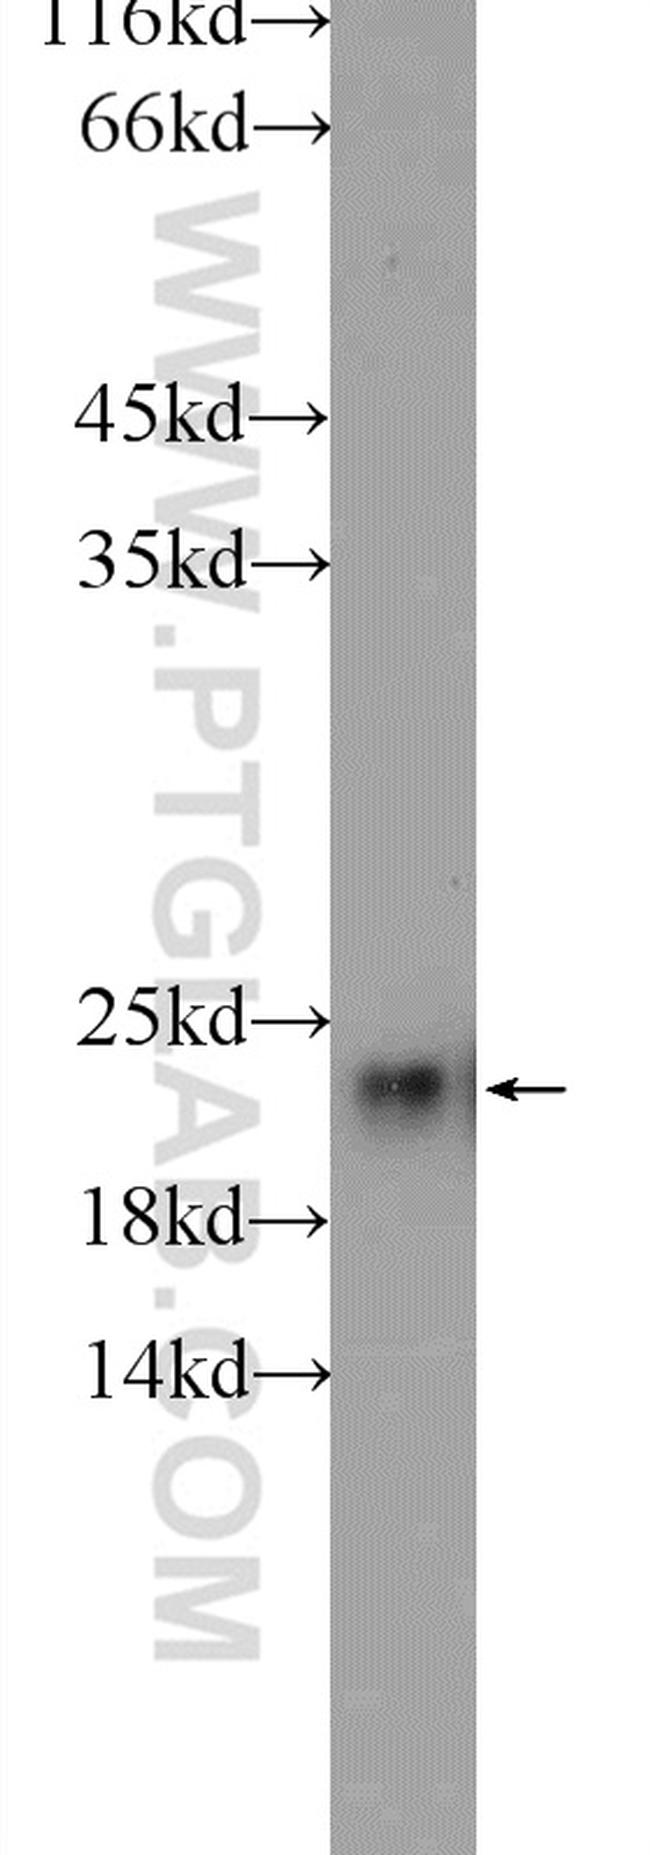 RSL24D1 Antibody in Western Blot (WB)